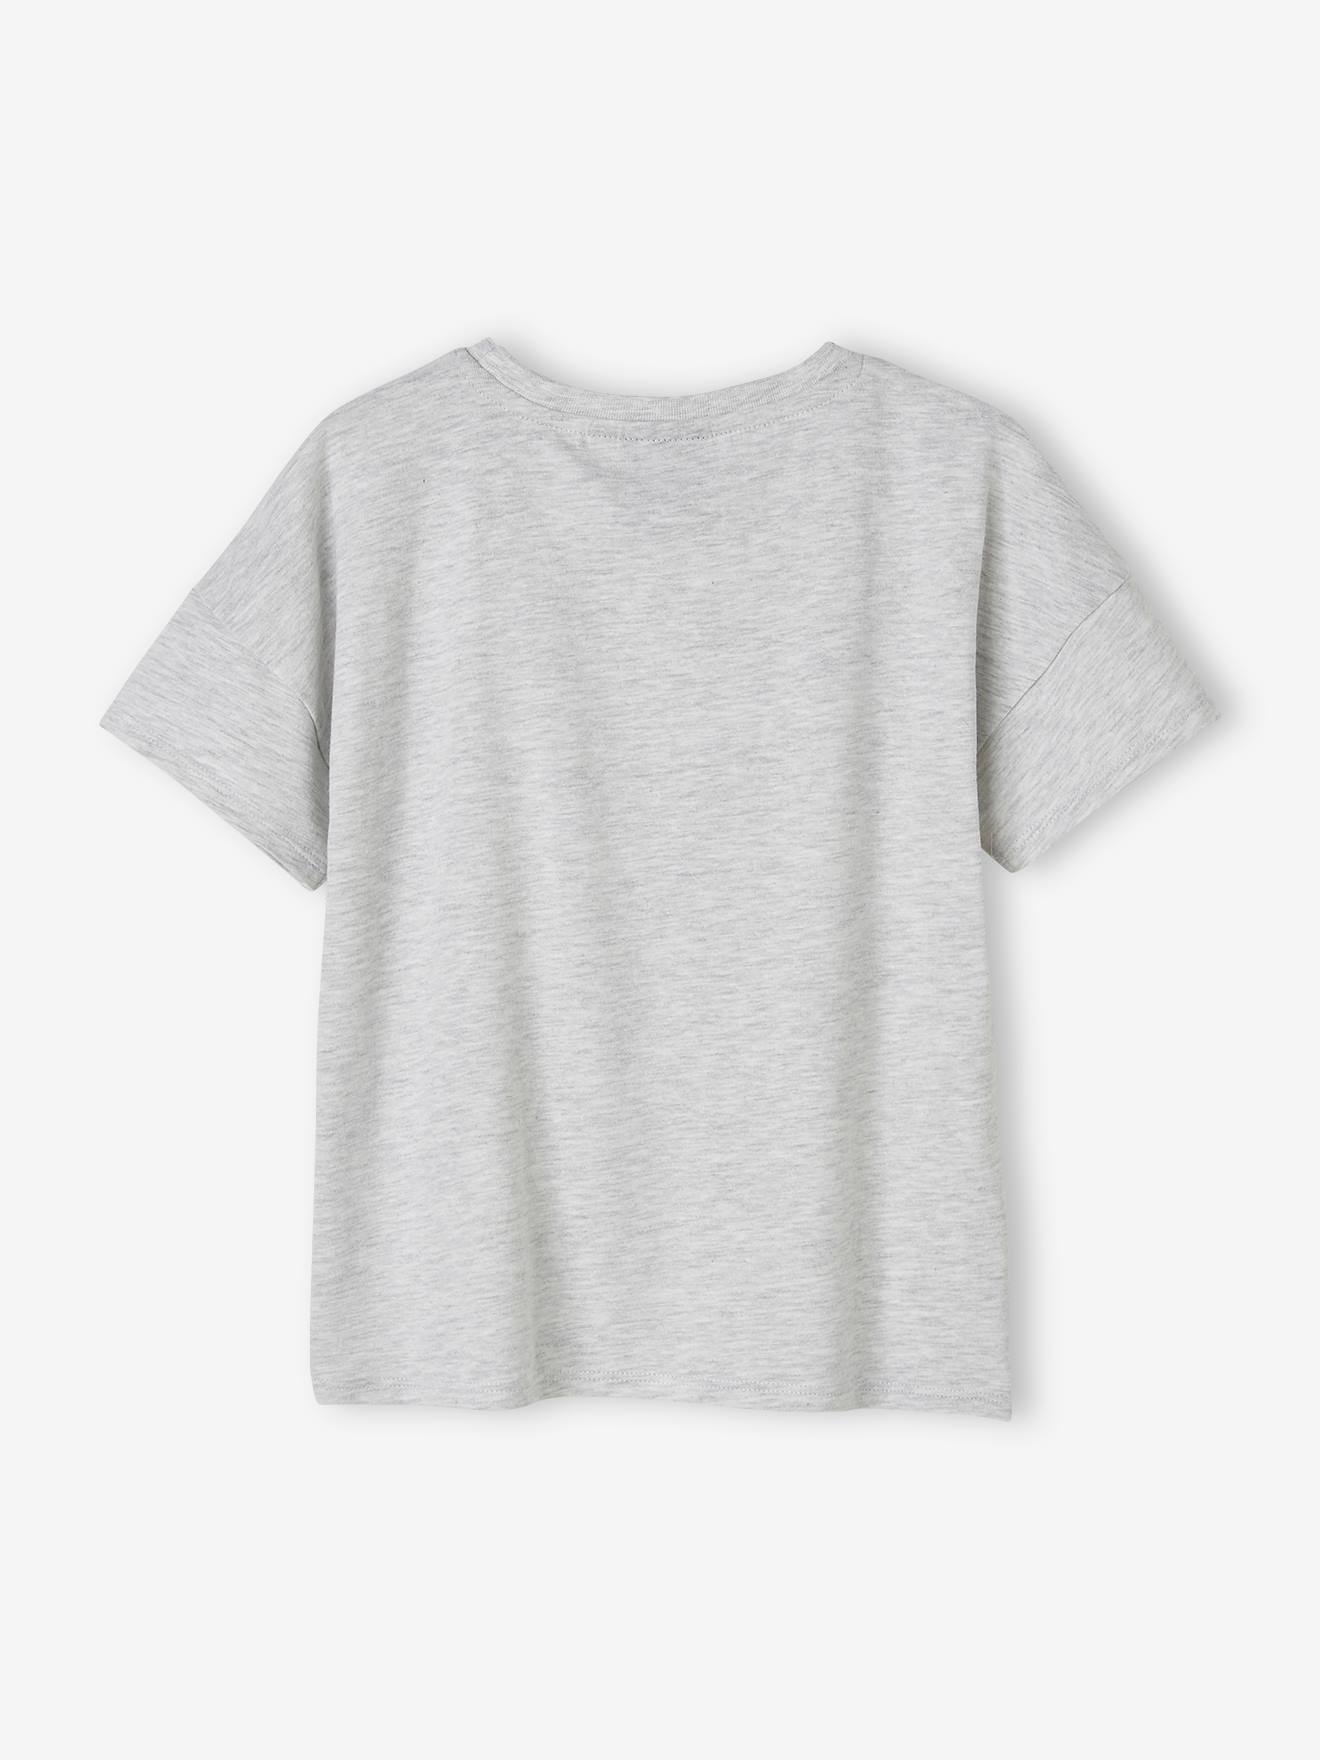 T-Shirt PEANUTS SNOOPY in meliert Mädchen grau Snoopy